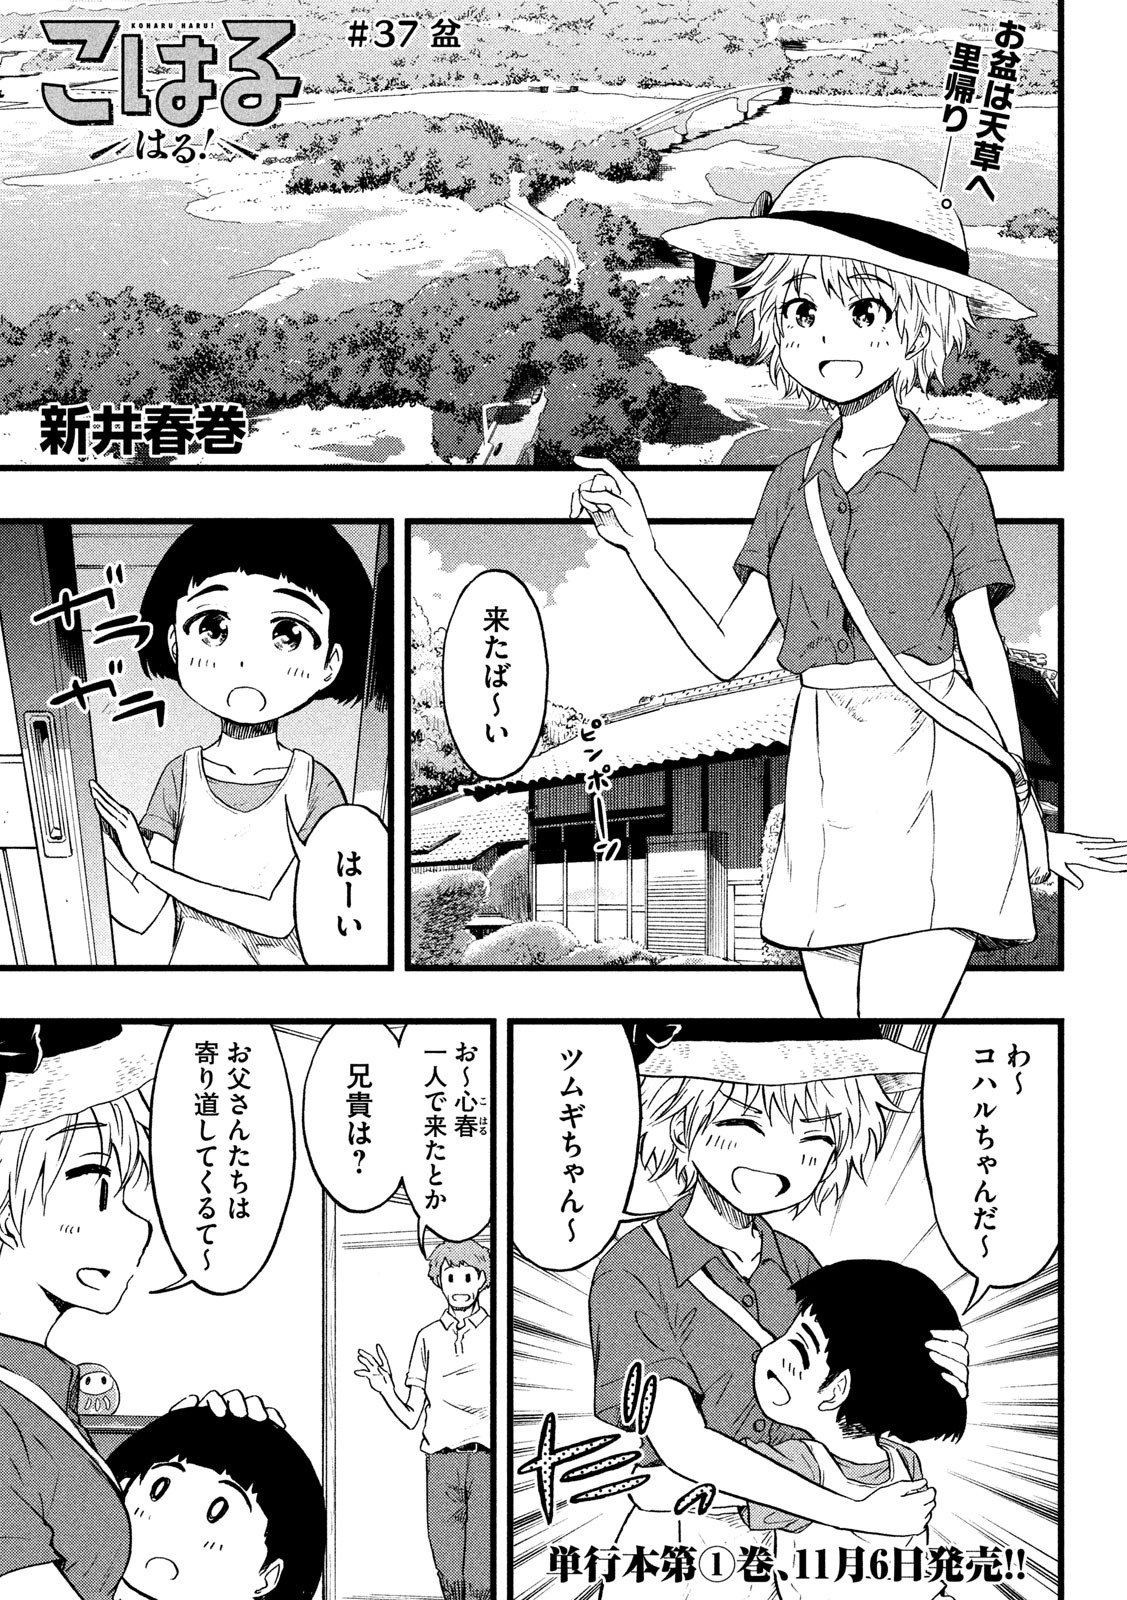 Koharu haru! - Chapter 37 - Page 1